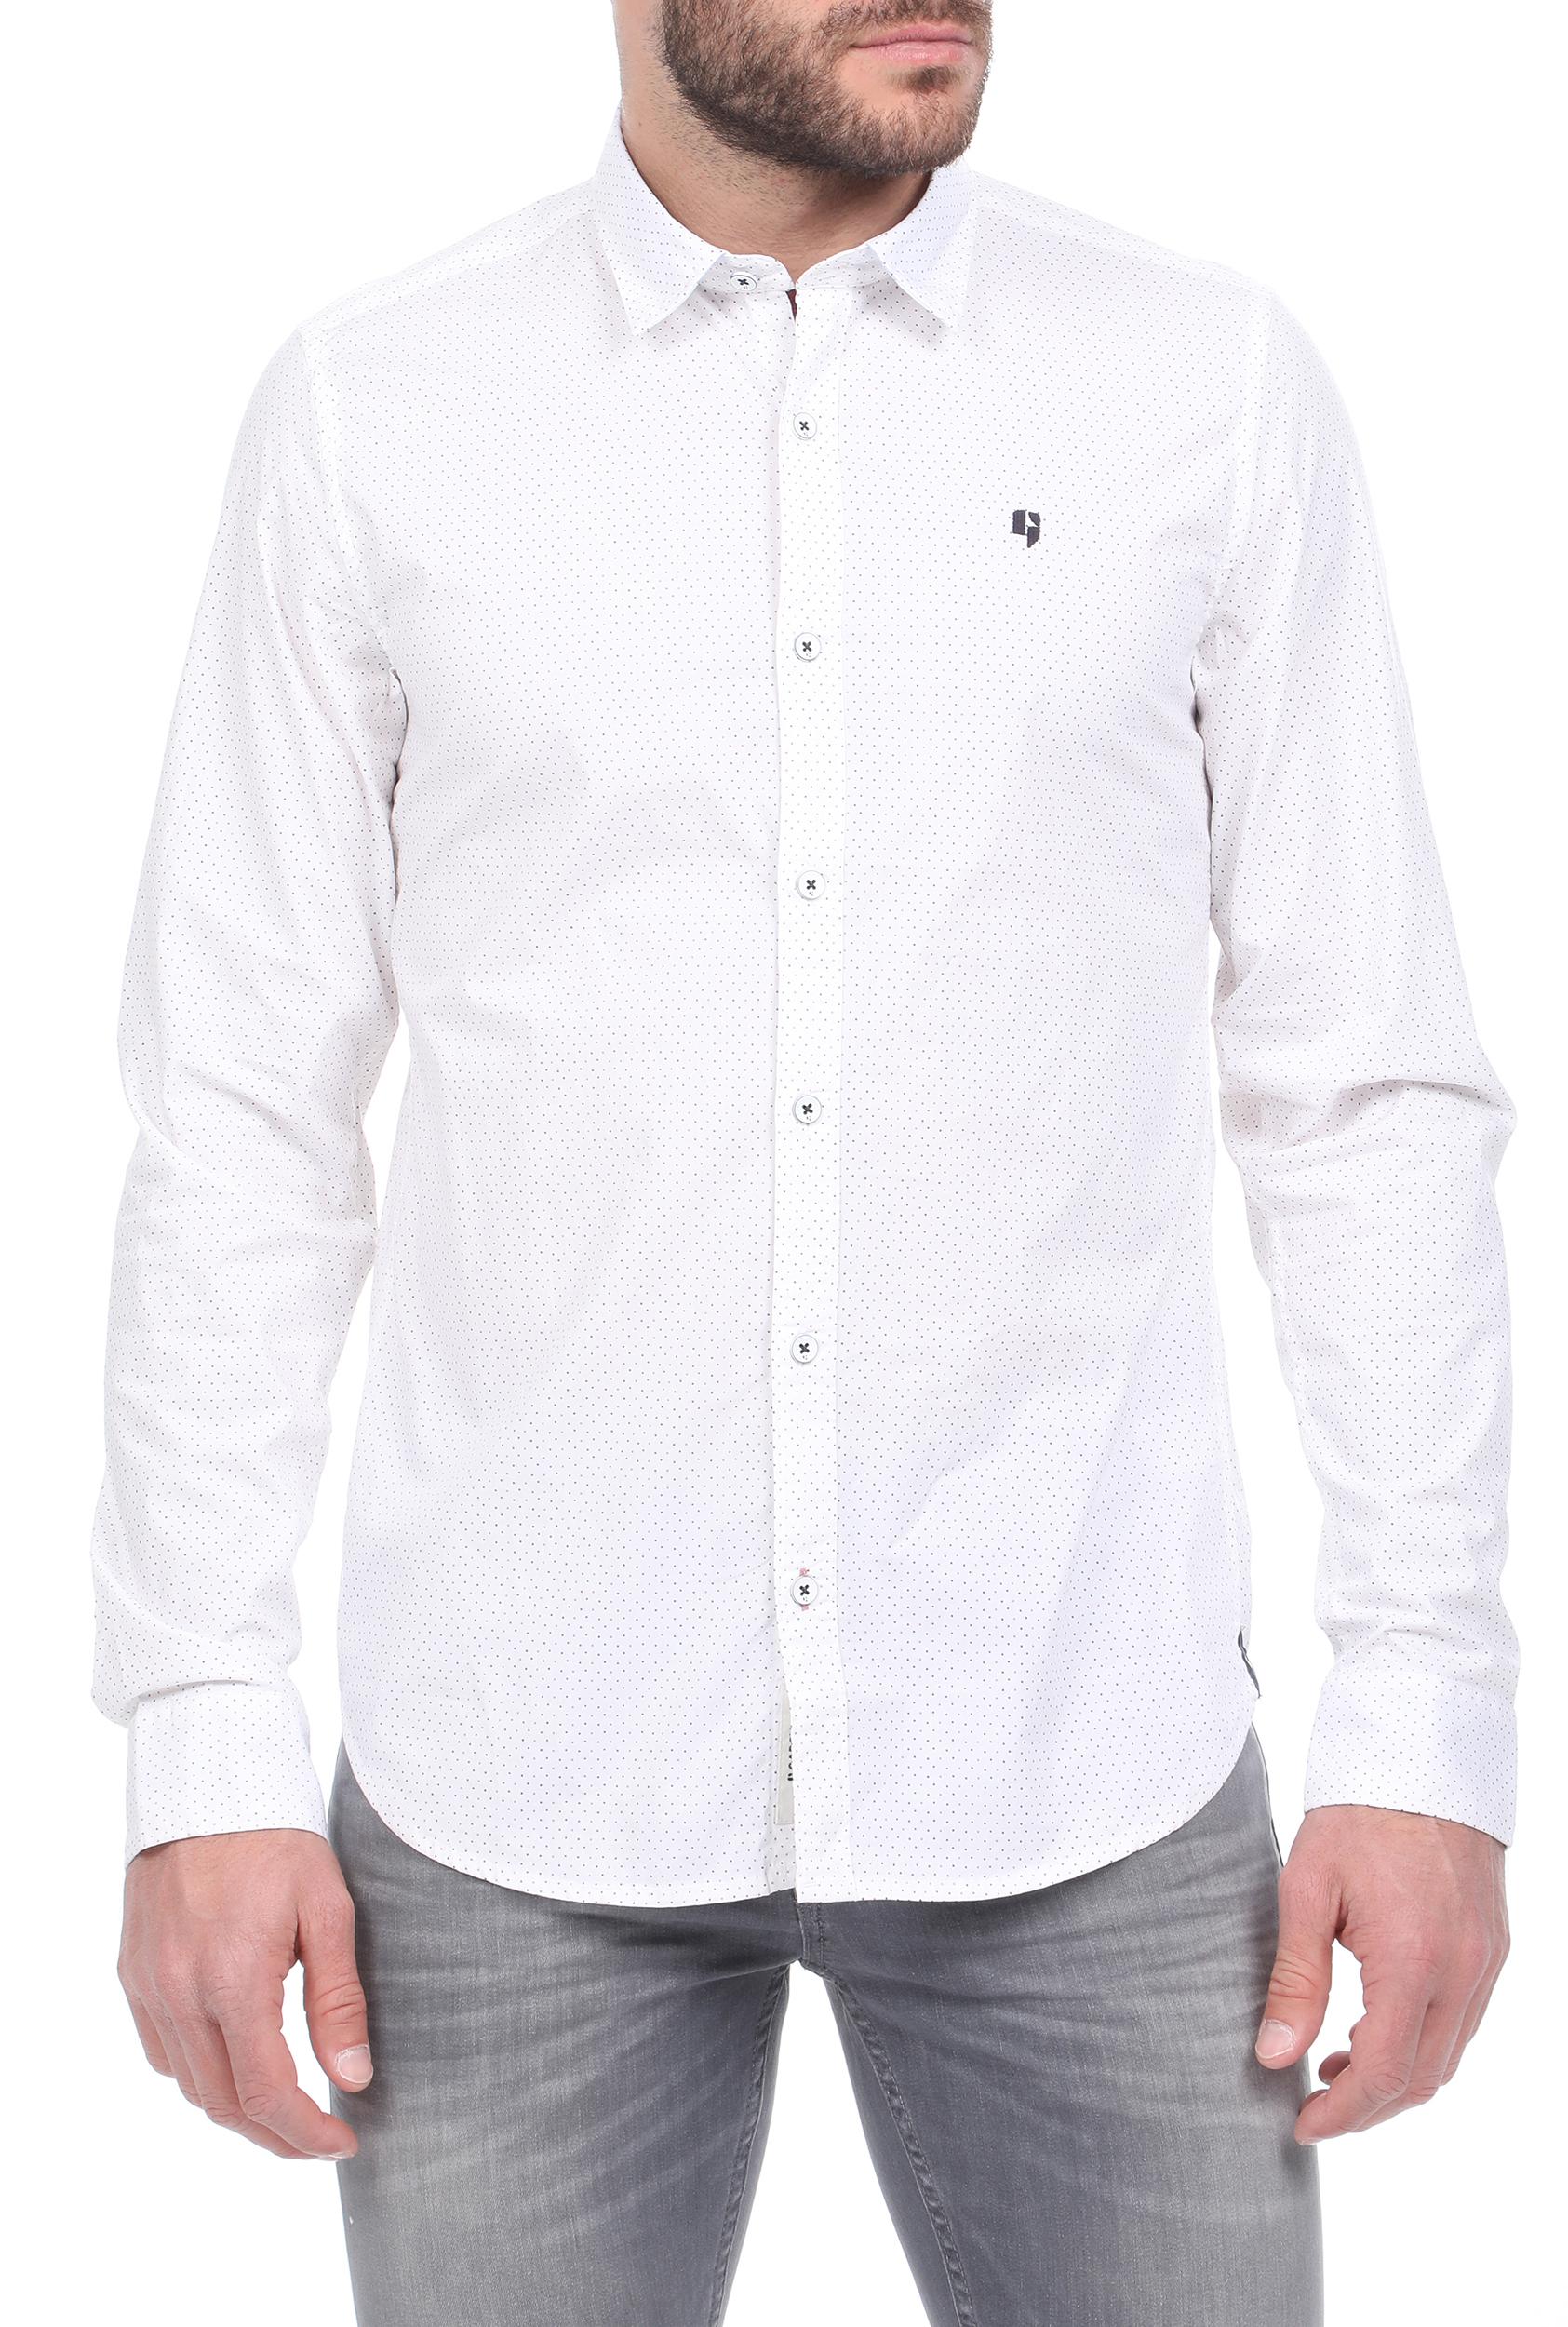 GARCIA JEANS – Ανδρικό πουκάμισο GARCIA JEANS λευκό μπλε 1811371.0-0091